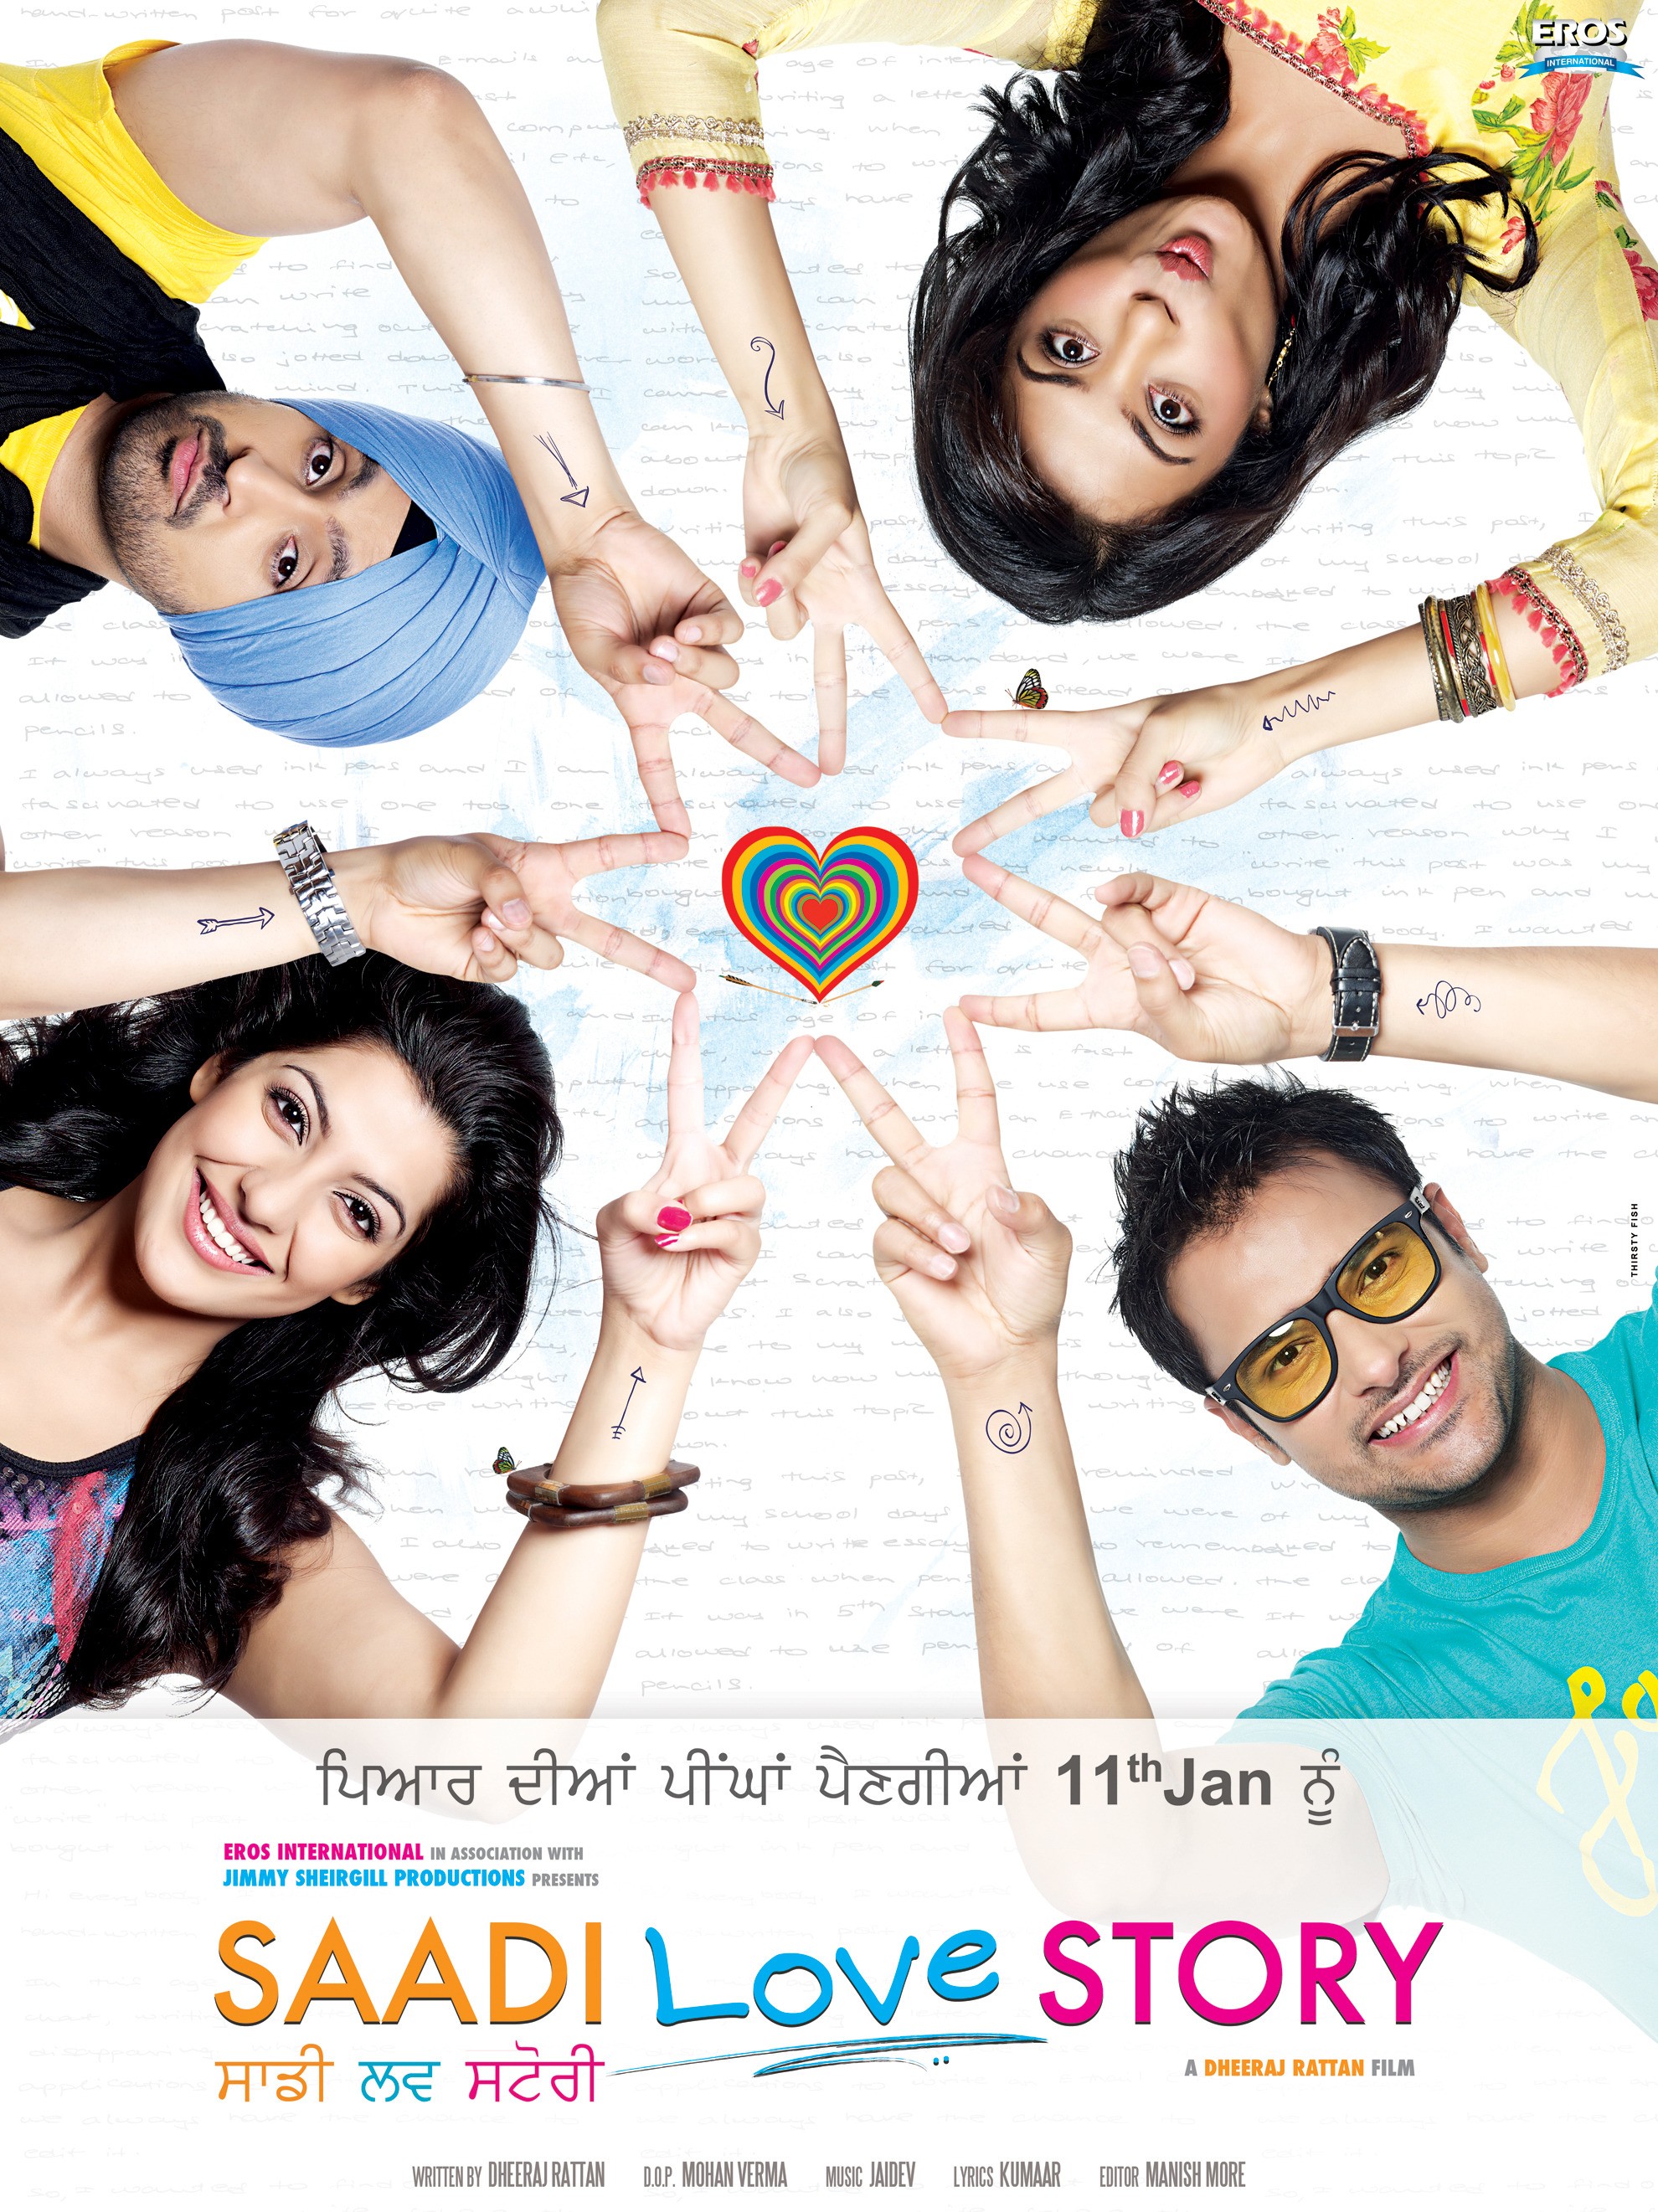 Mega Sized Movie Poster Image for Saadi Love Story (#2 of 5)